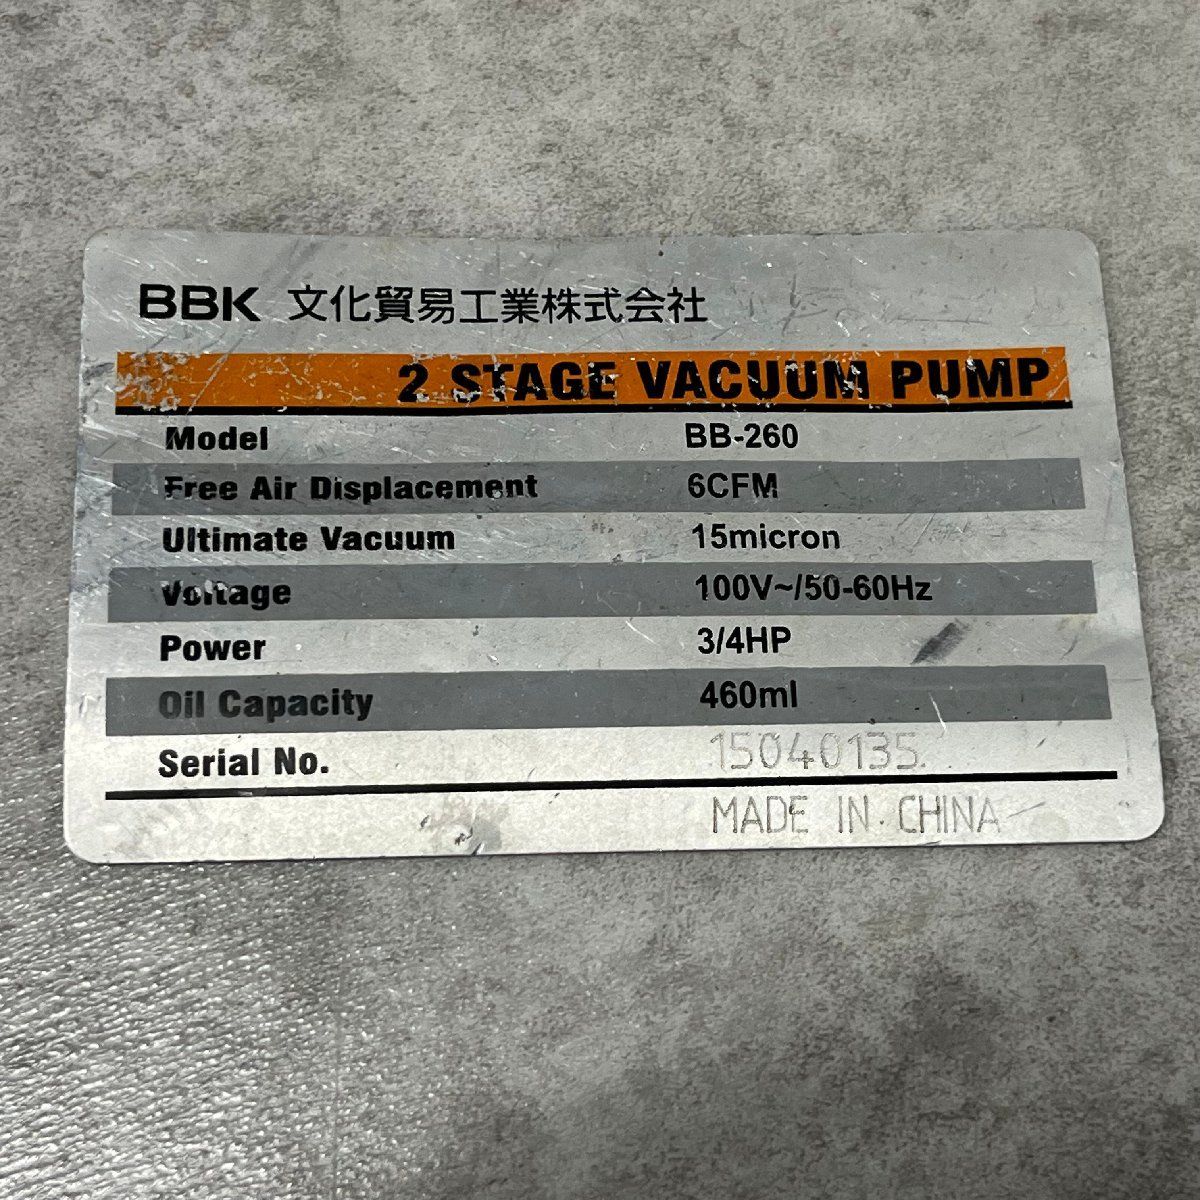 BBKテクノロジーズ 【】大型真空ポンプ BB-260 特殊工具